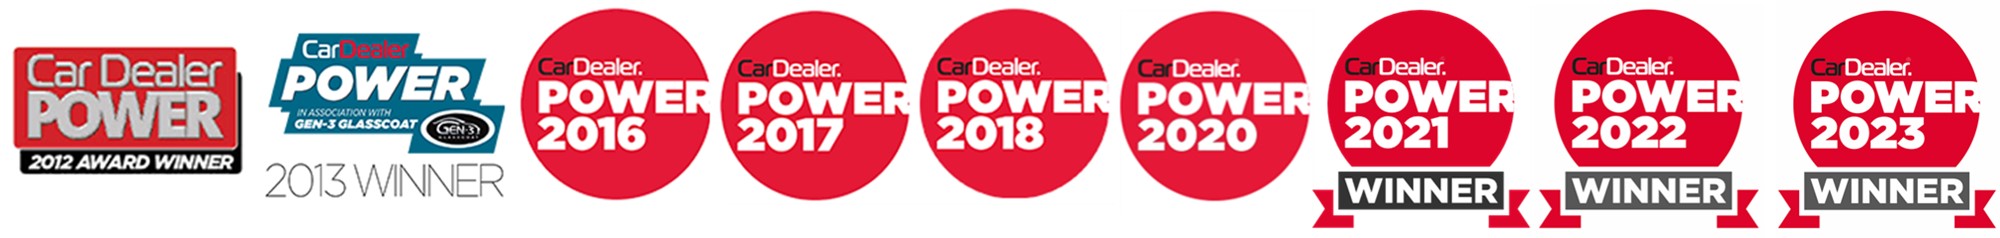 Car Dealer Power Awards 2023